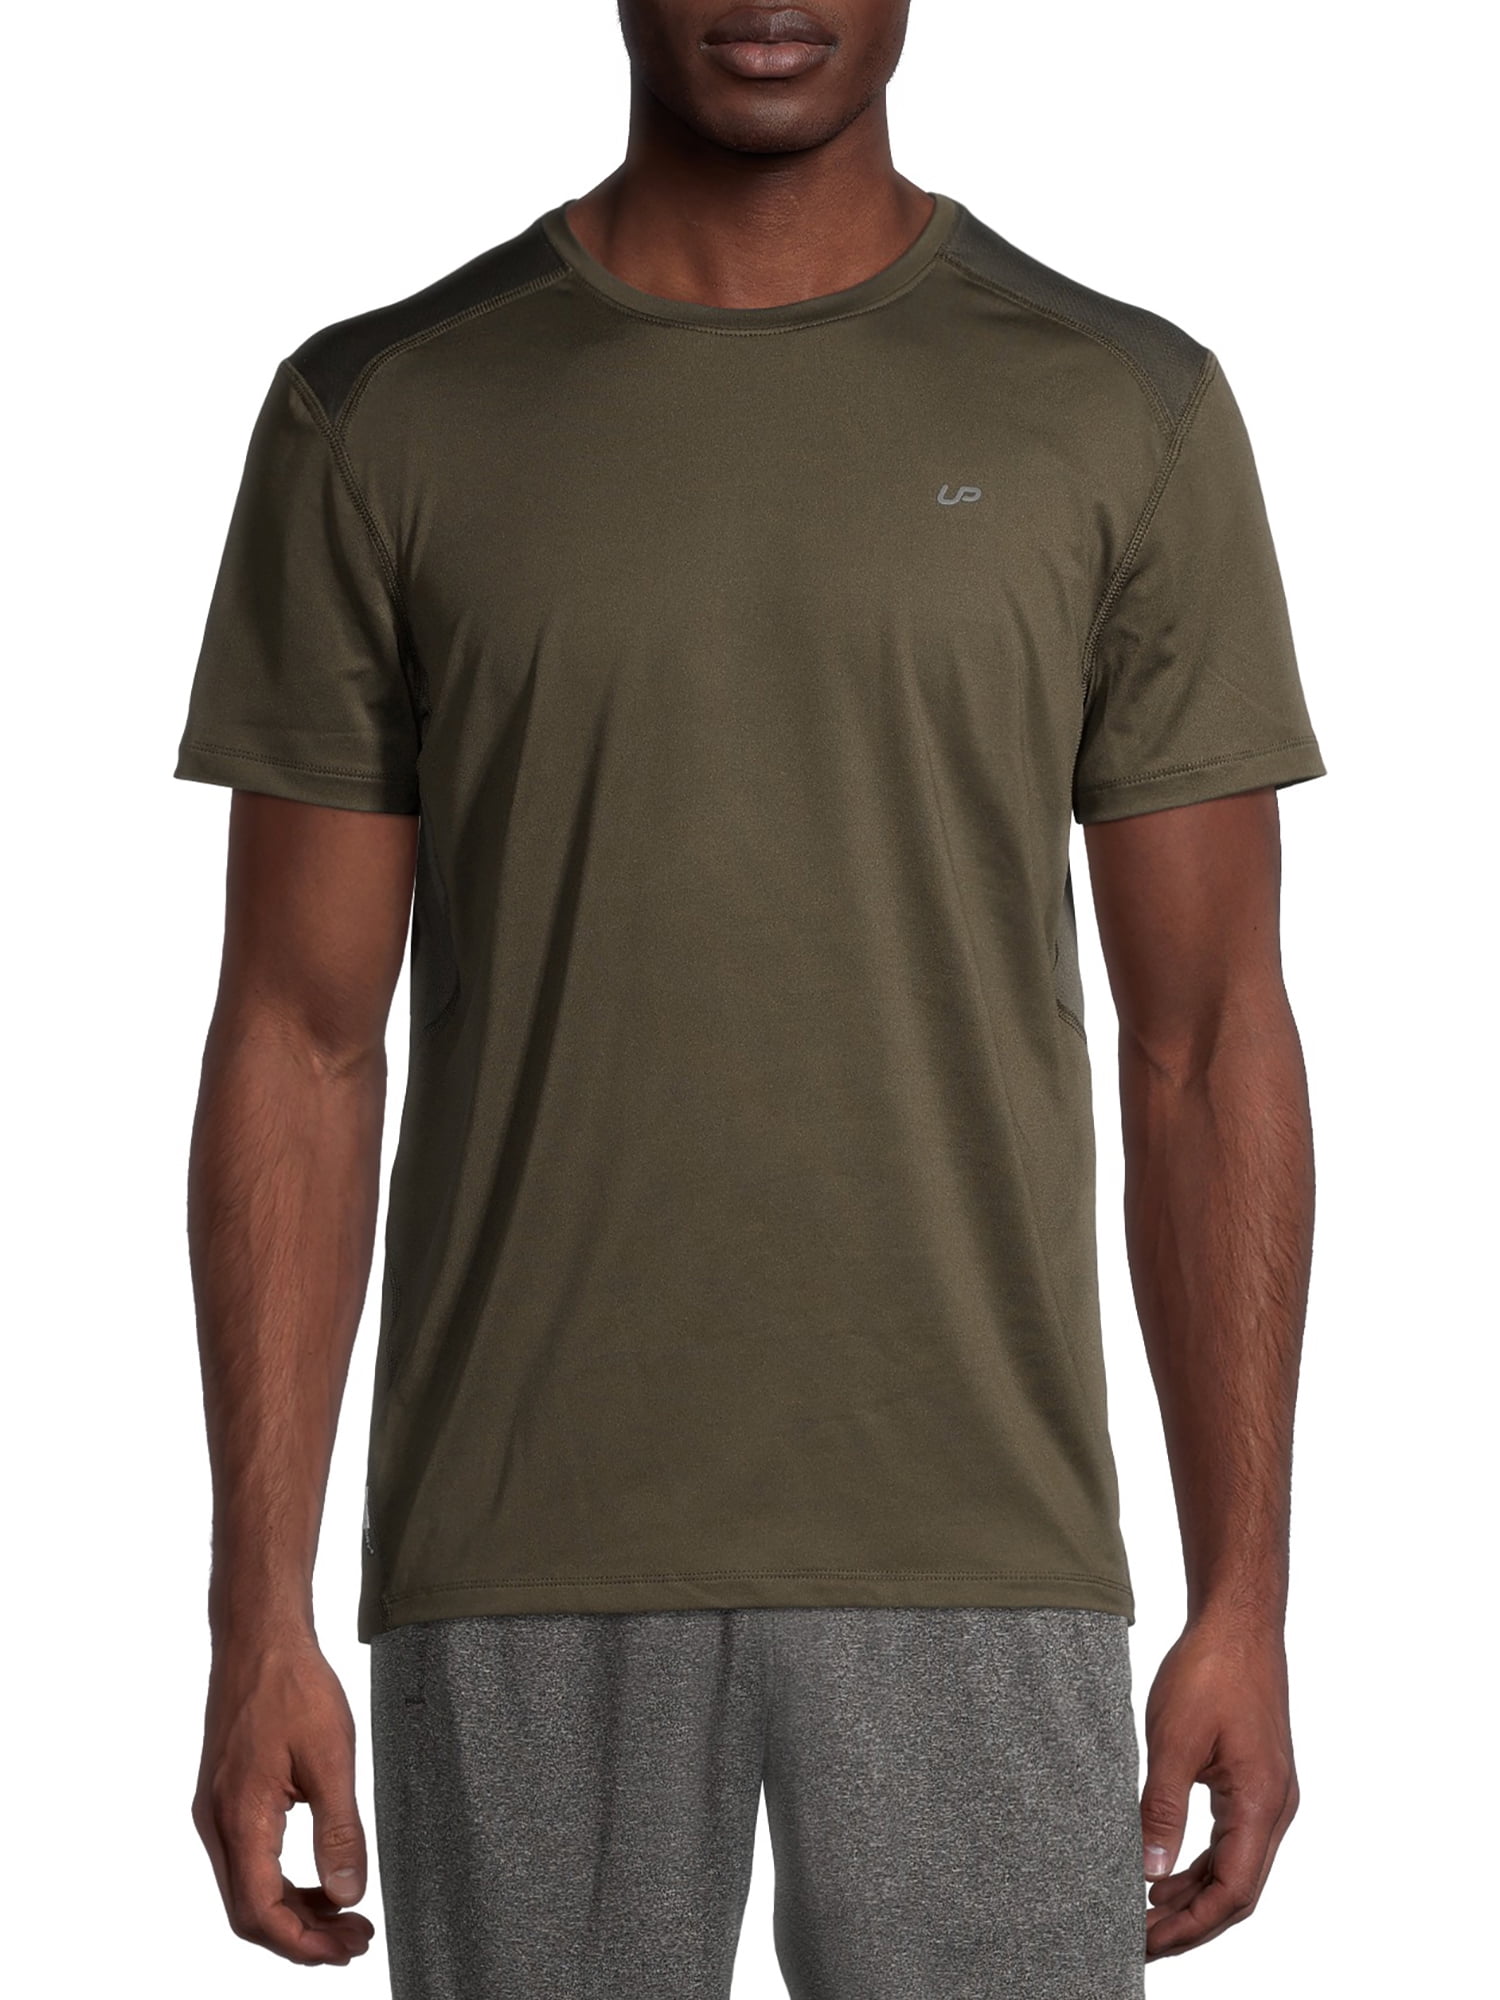 UniPro - Unipro Men's Stretch Jersey T-Shirt, up to Size 2XL - Walmart ...